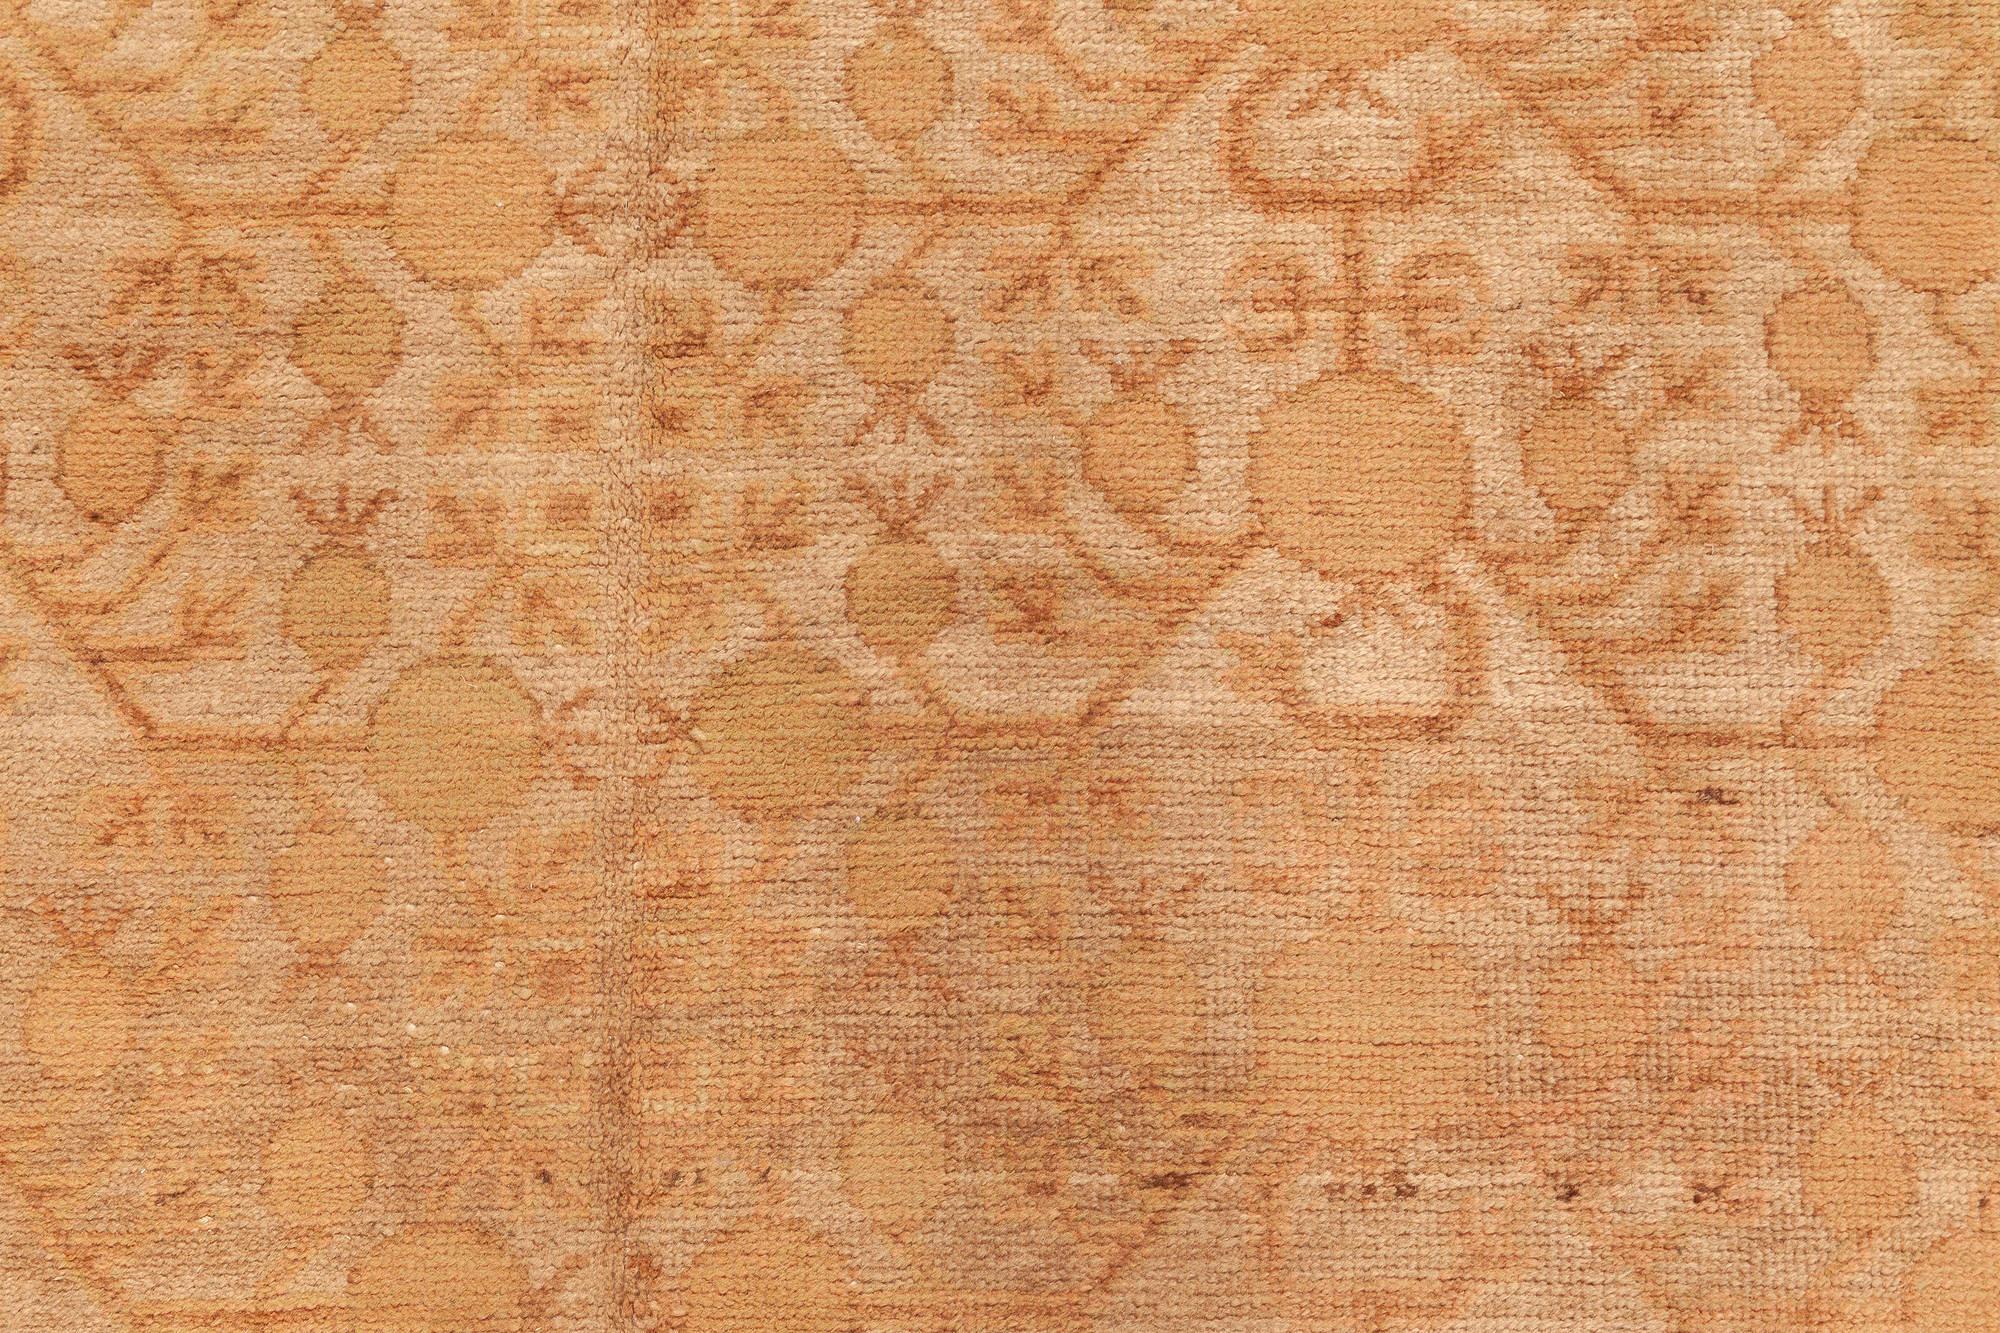 Mid-20th century Samarkand handwoven wool rug
Size: 5'9